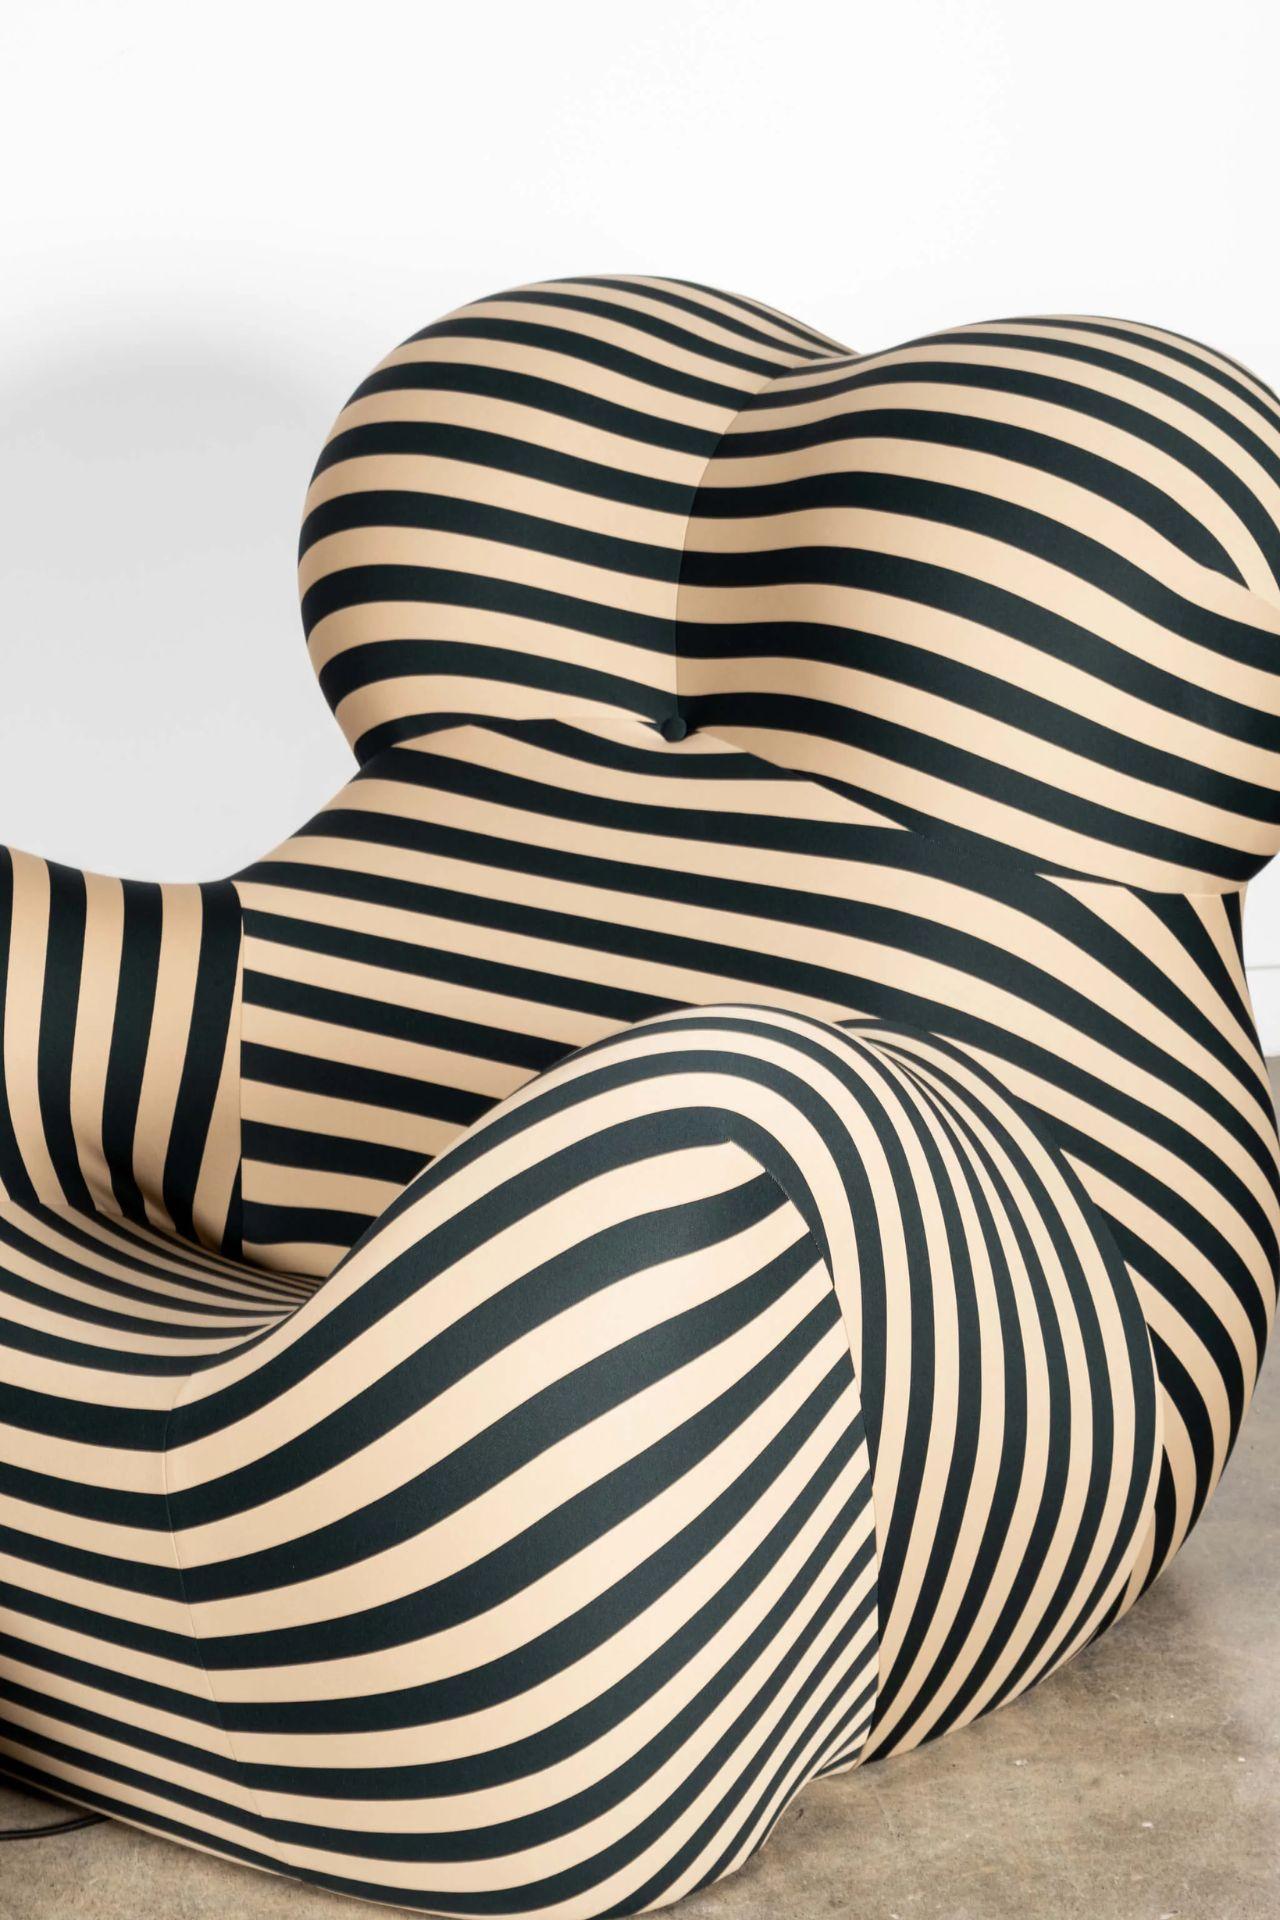 Fabric B&B Italia 'La Mamma' Up 5/6 Lounge Chair&Ottoman, Green Stripe by Gaetano Pesce For Sale